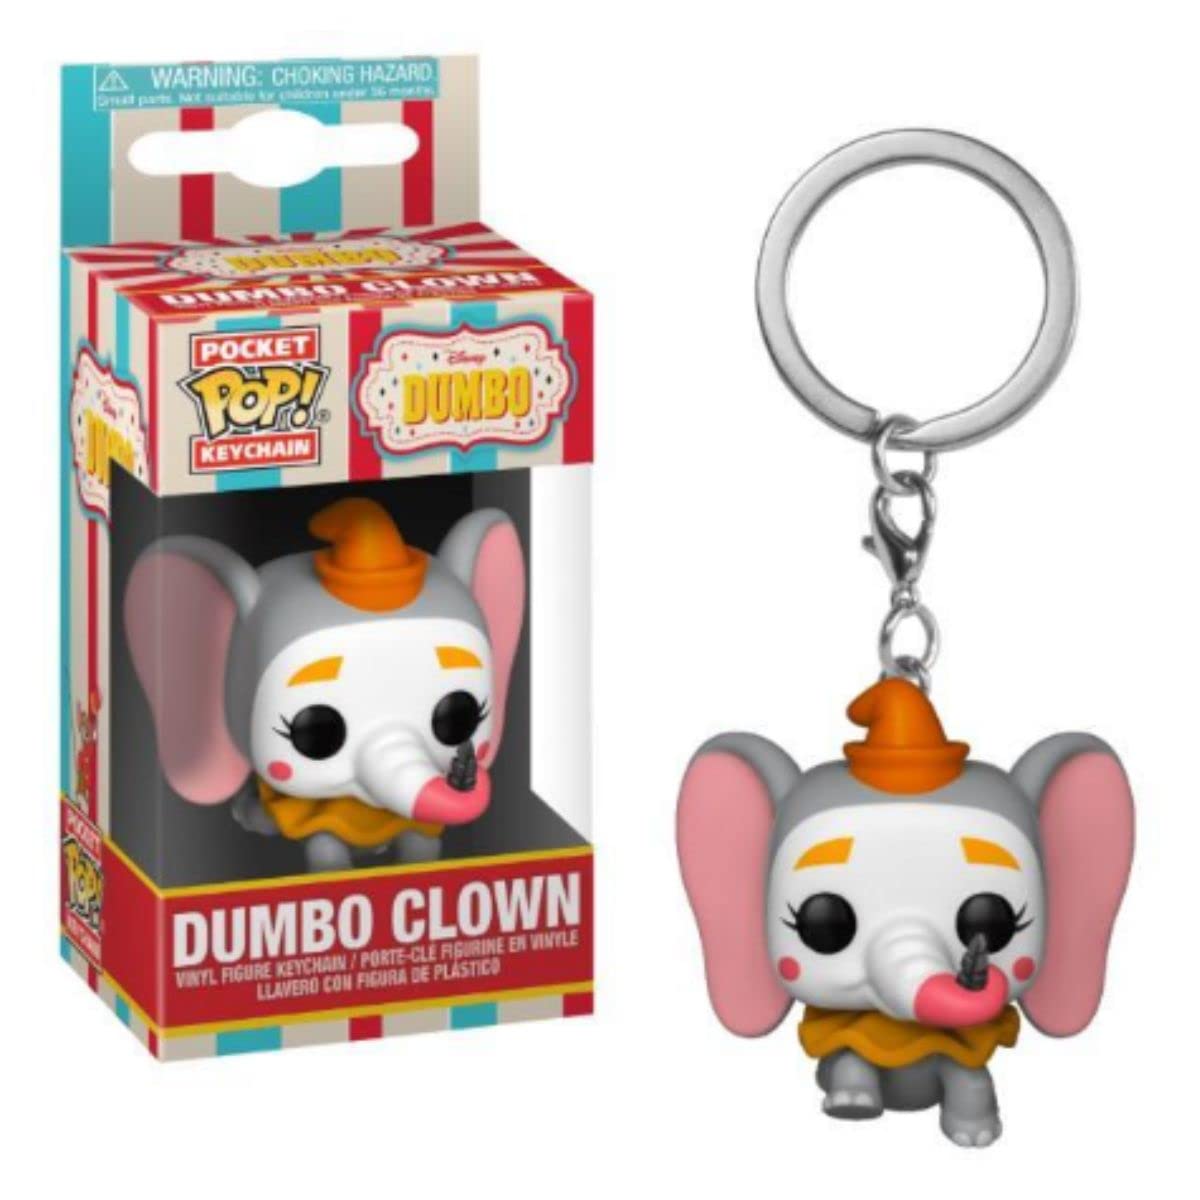 Funko Pocket POP! Keychain Disney Dumbo Clown Exclusive